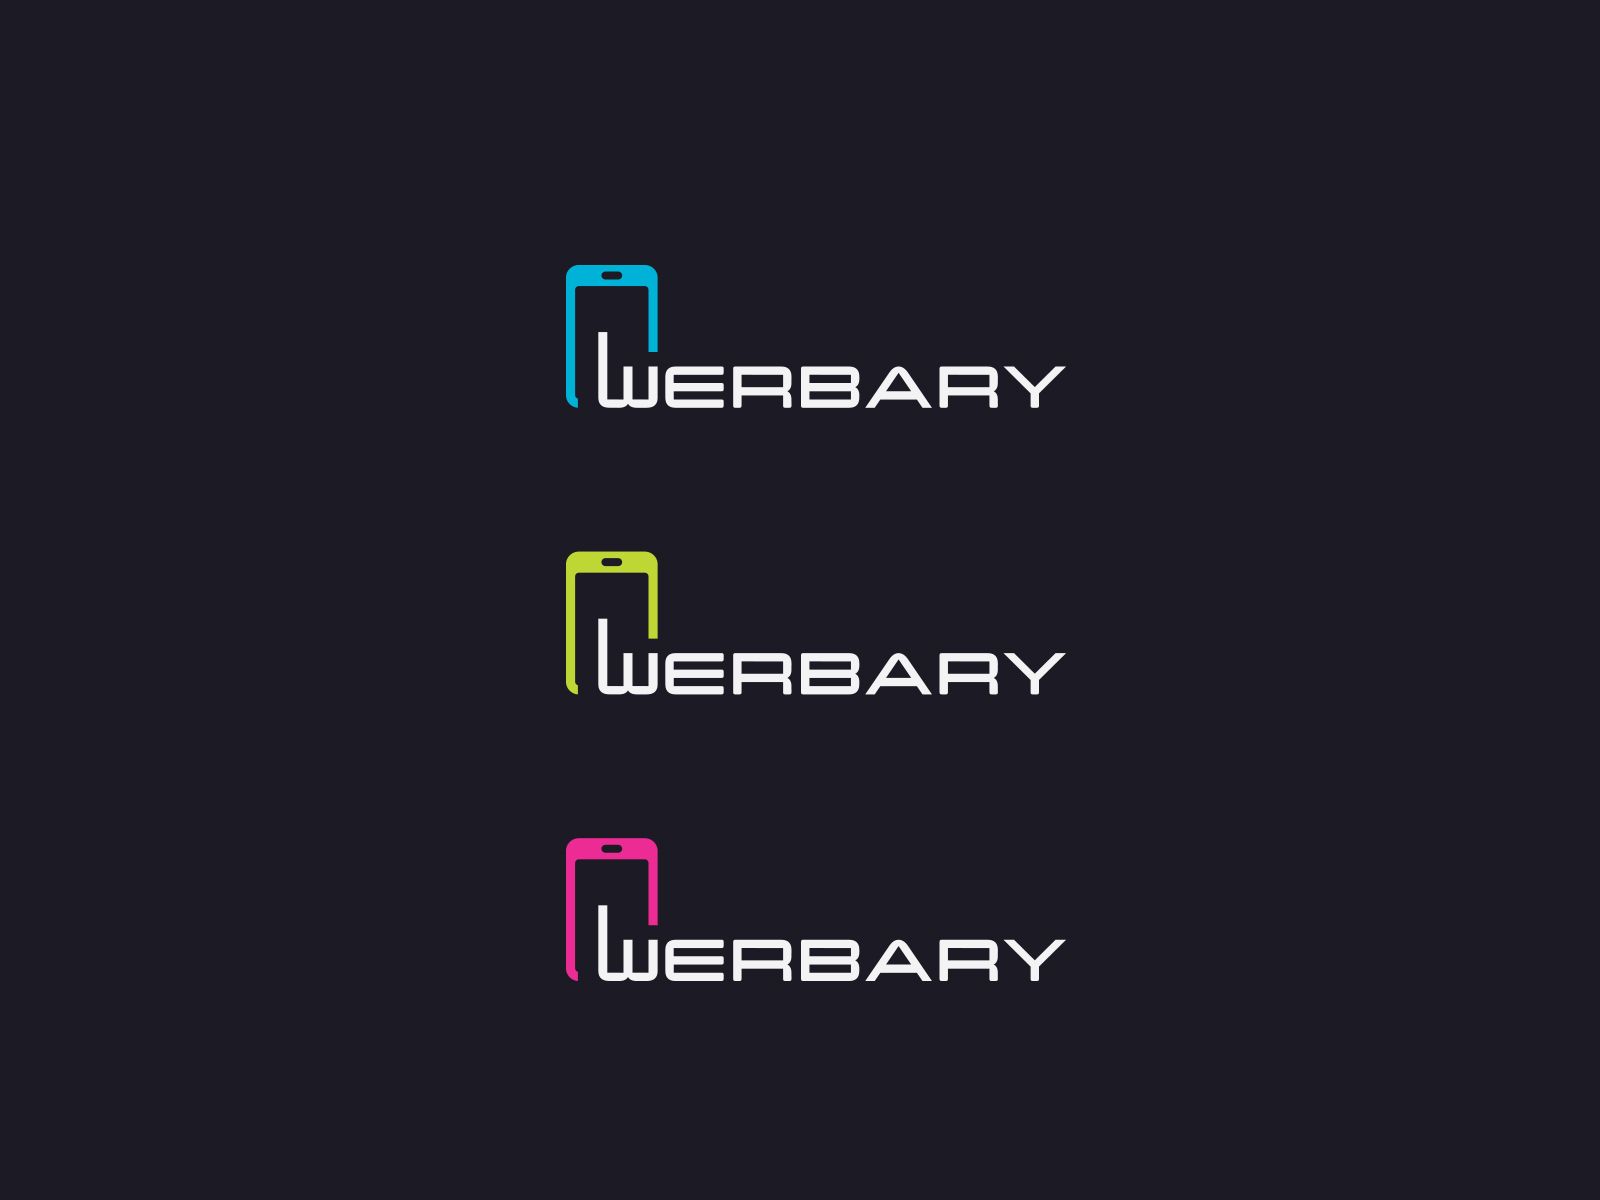 Логотип для Werbary - дизайнер U4po4mak